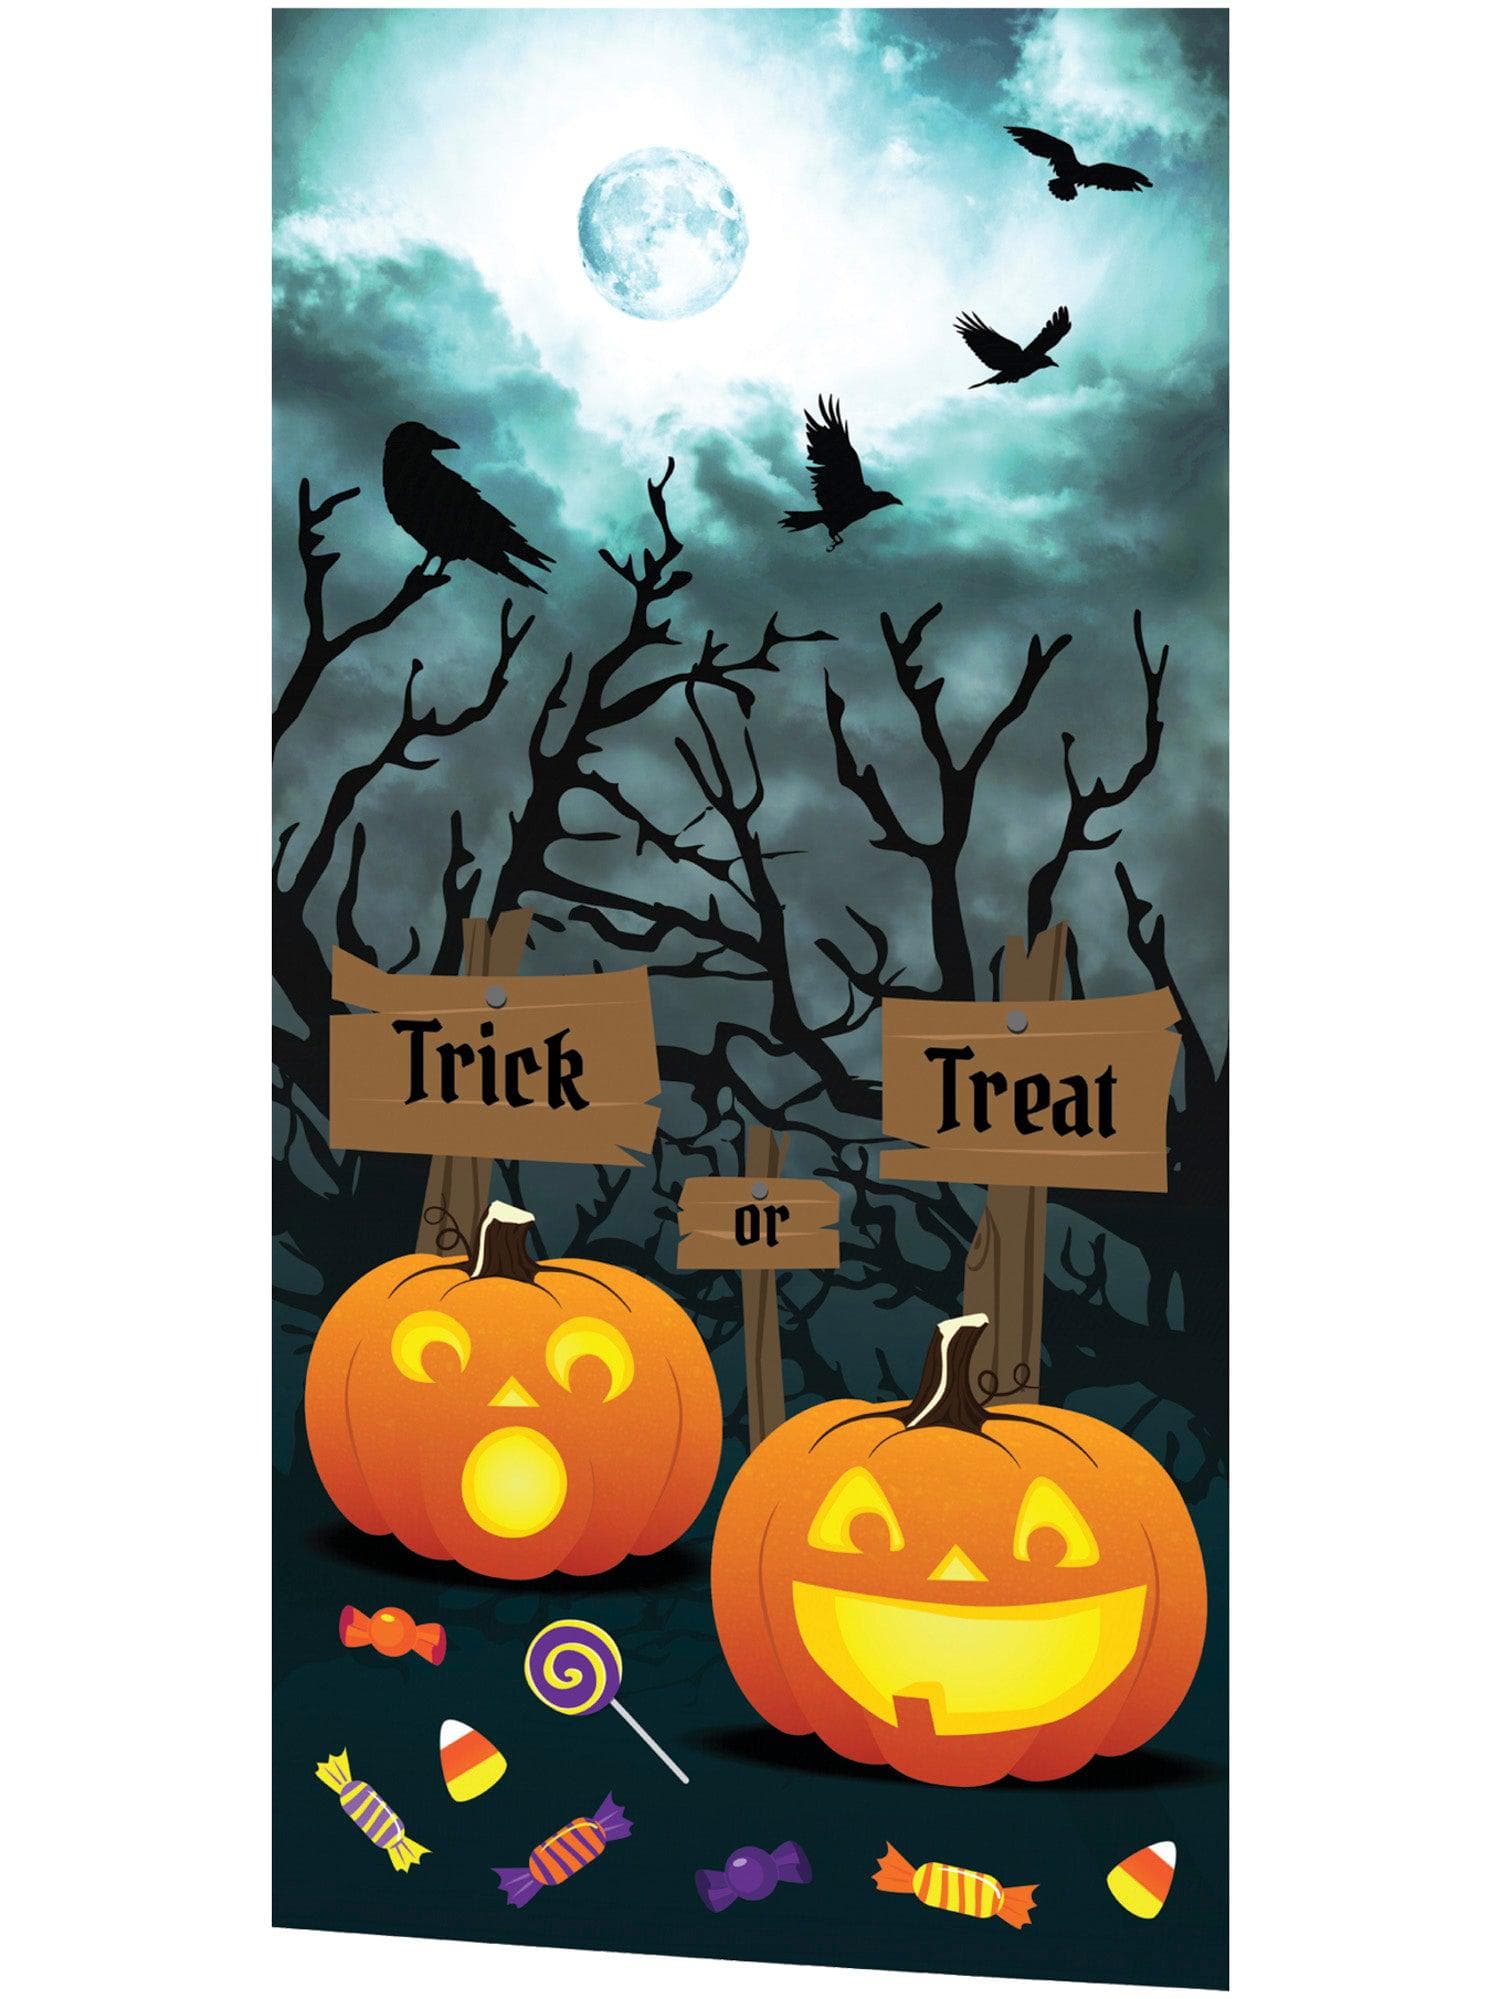 Trick or Treat Halloween Door Cover Decoration - costumes.com